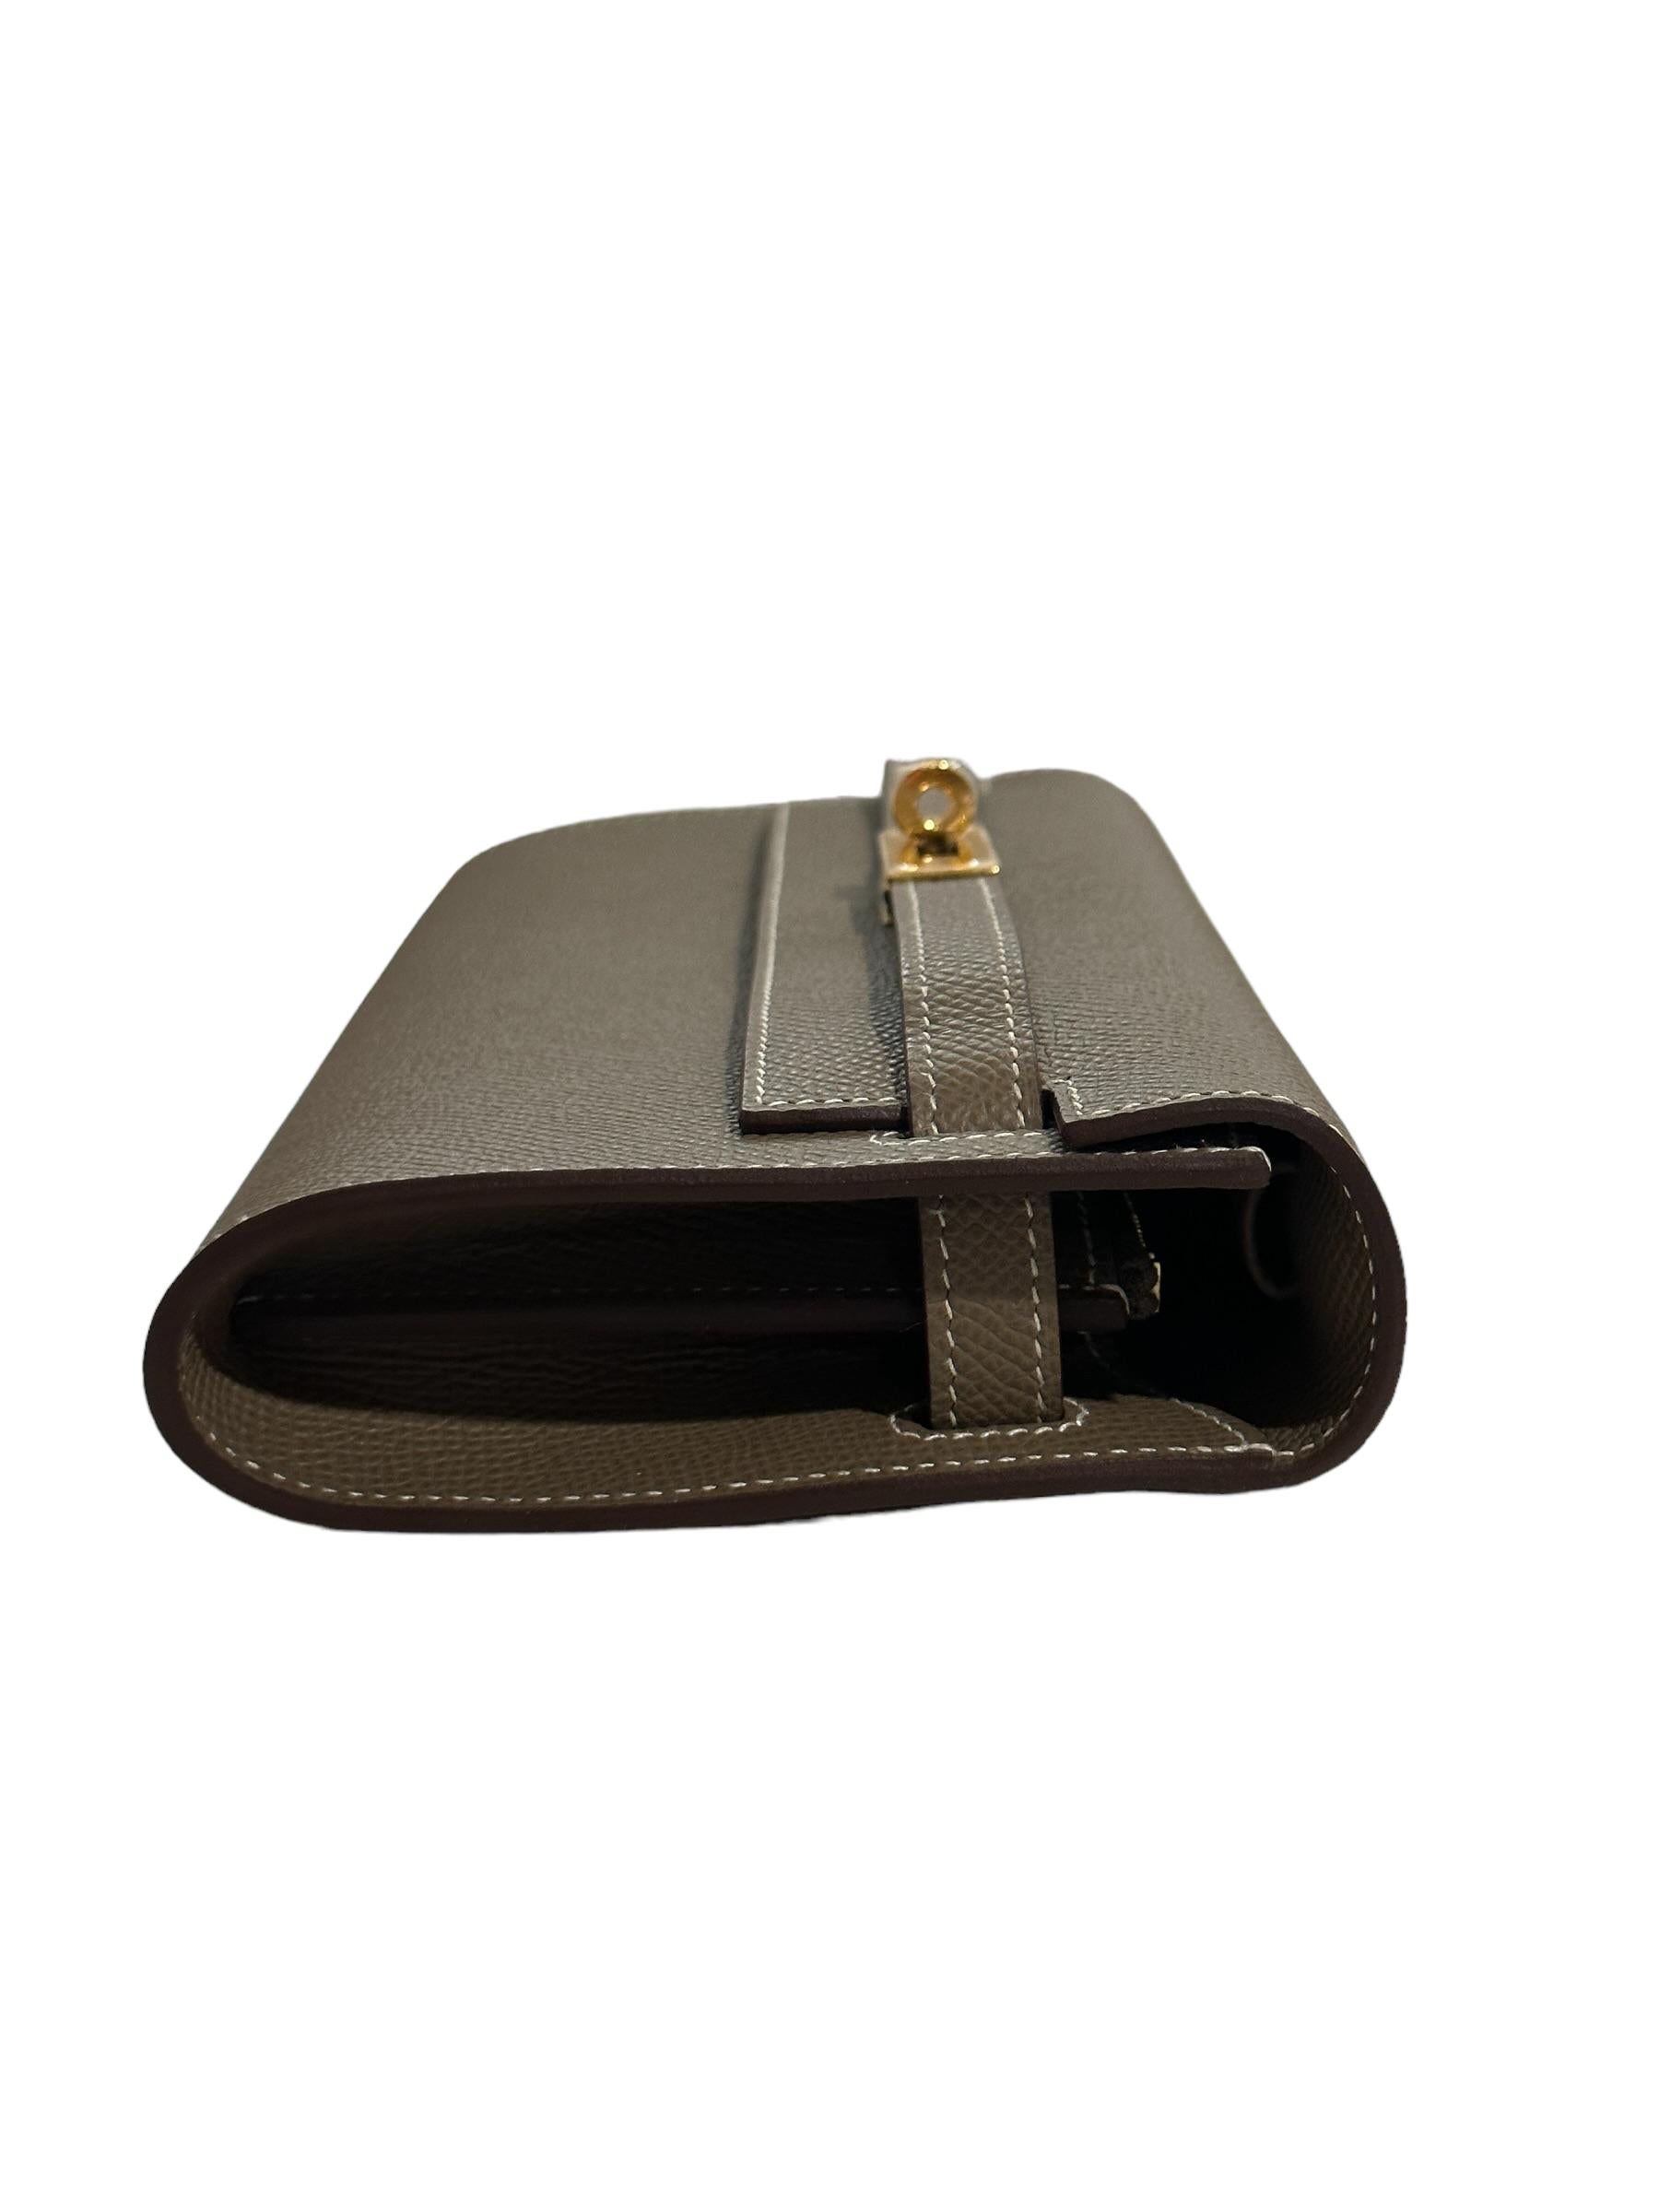 Hermes Etoupe Kelly To Go Bag Wallet Epsom Gold Hardware New Strap 4